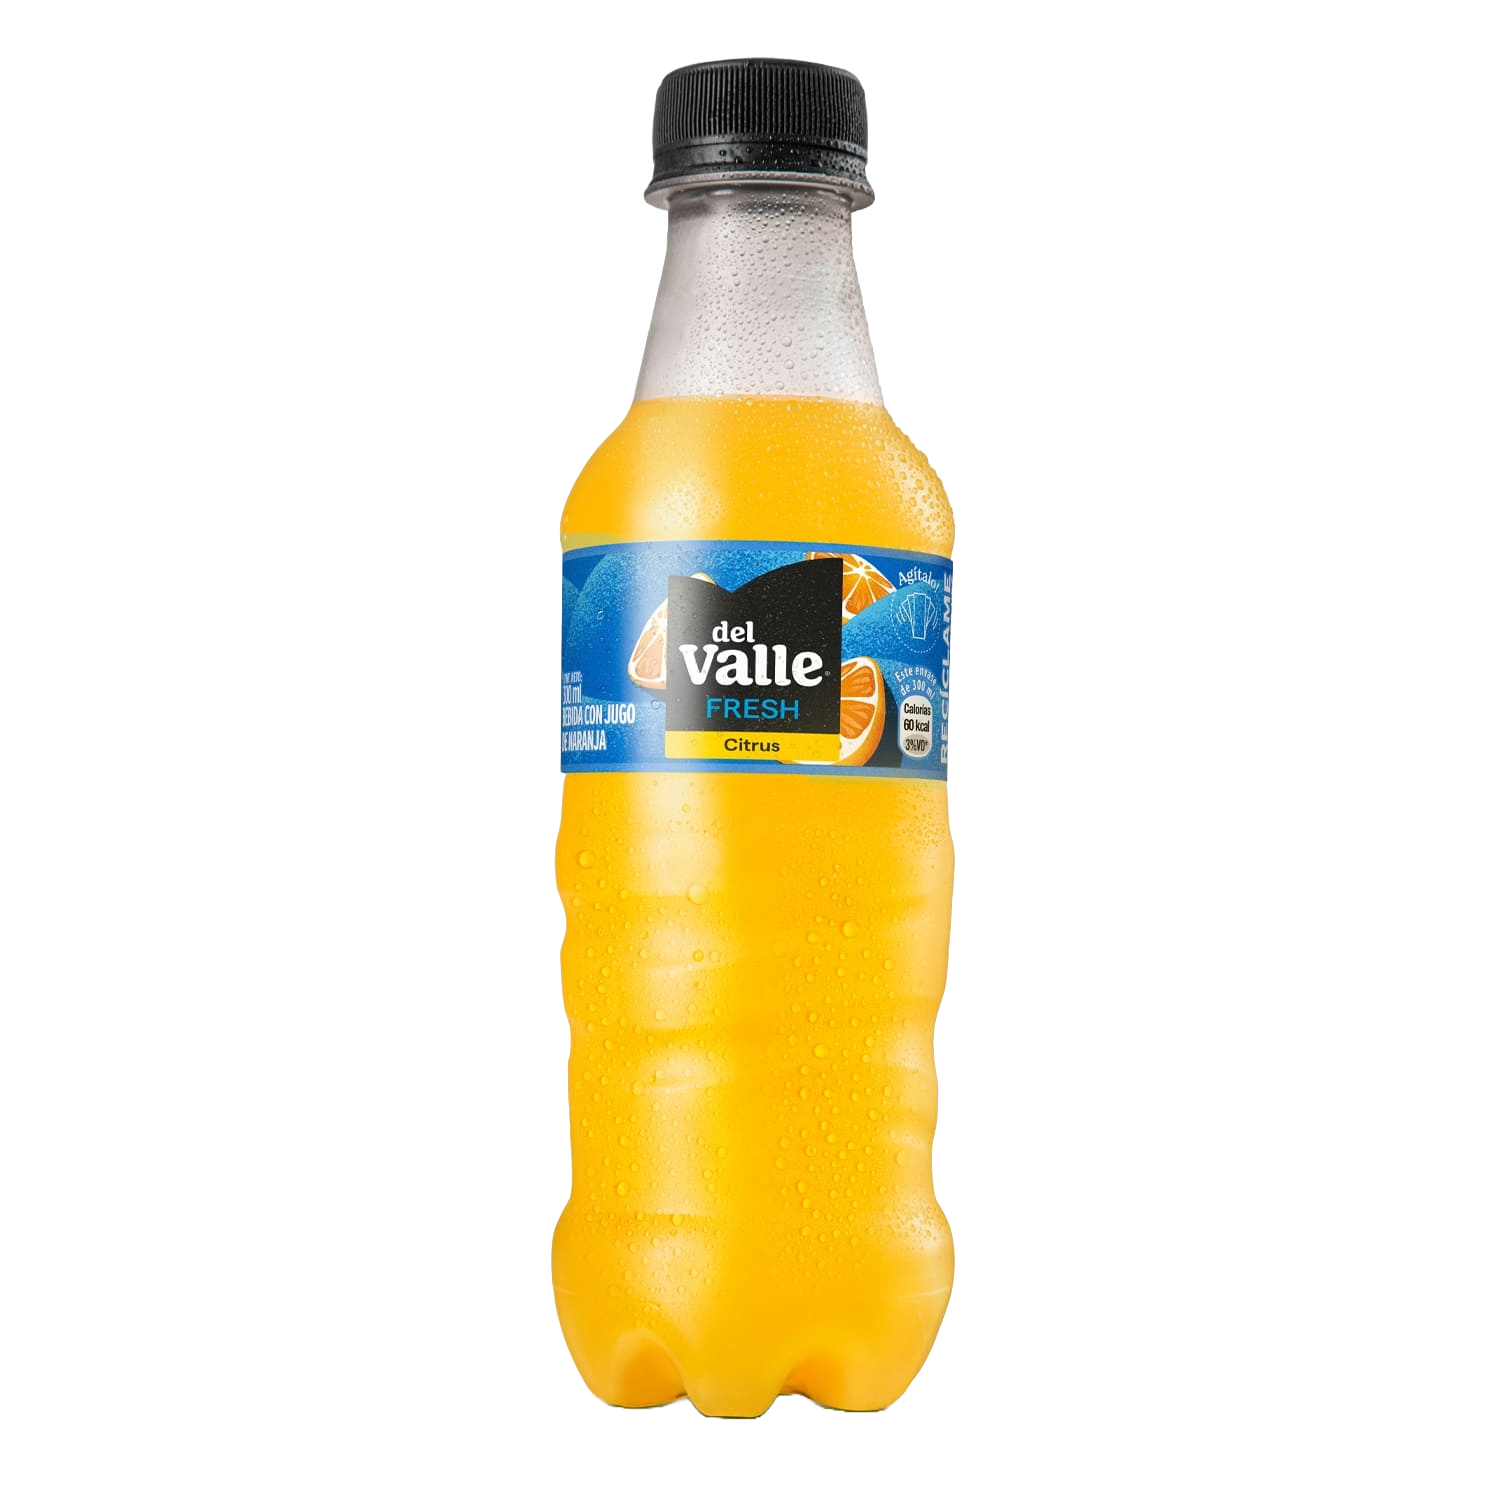 Botella de Del Valle Fresh Citrus 300mL